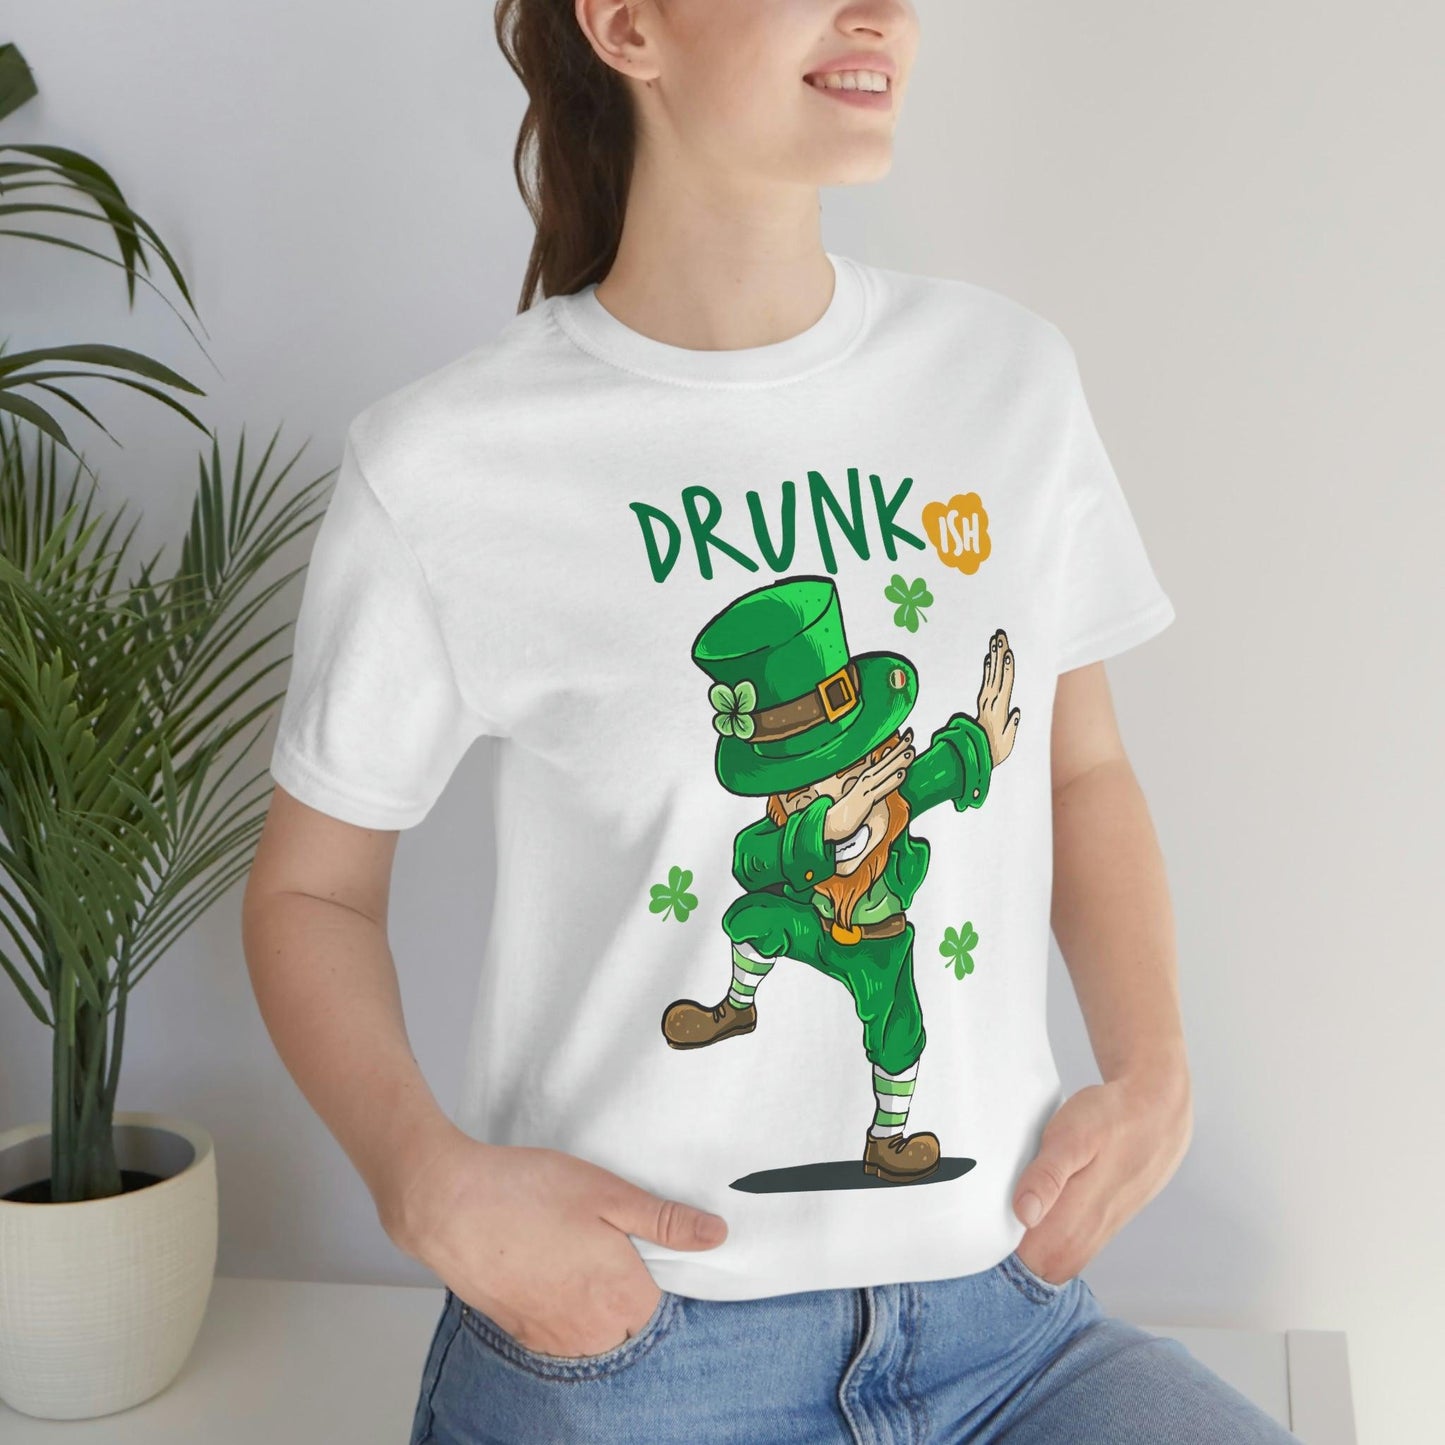 Funny St Patrick's Day shirt Lucky Shamrock shirt shenanigans shirt St Paddys day shirt - Day drinking shirt Drunk ish shirt